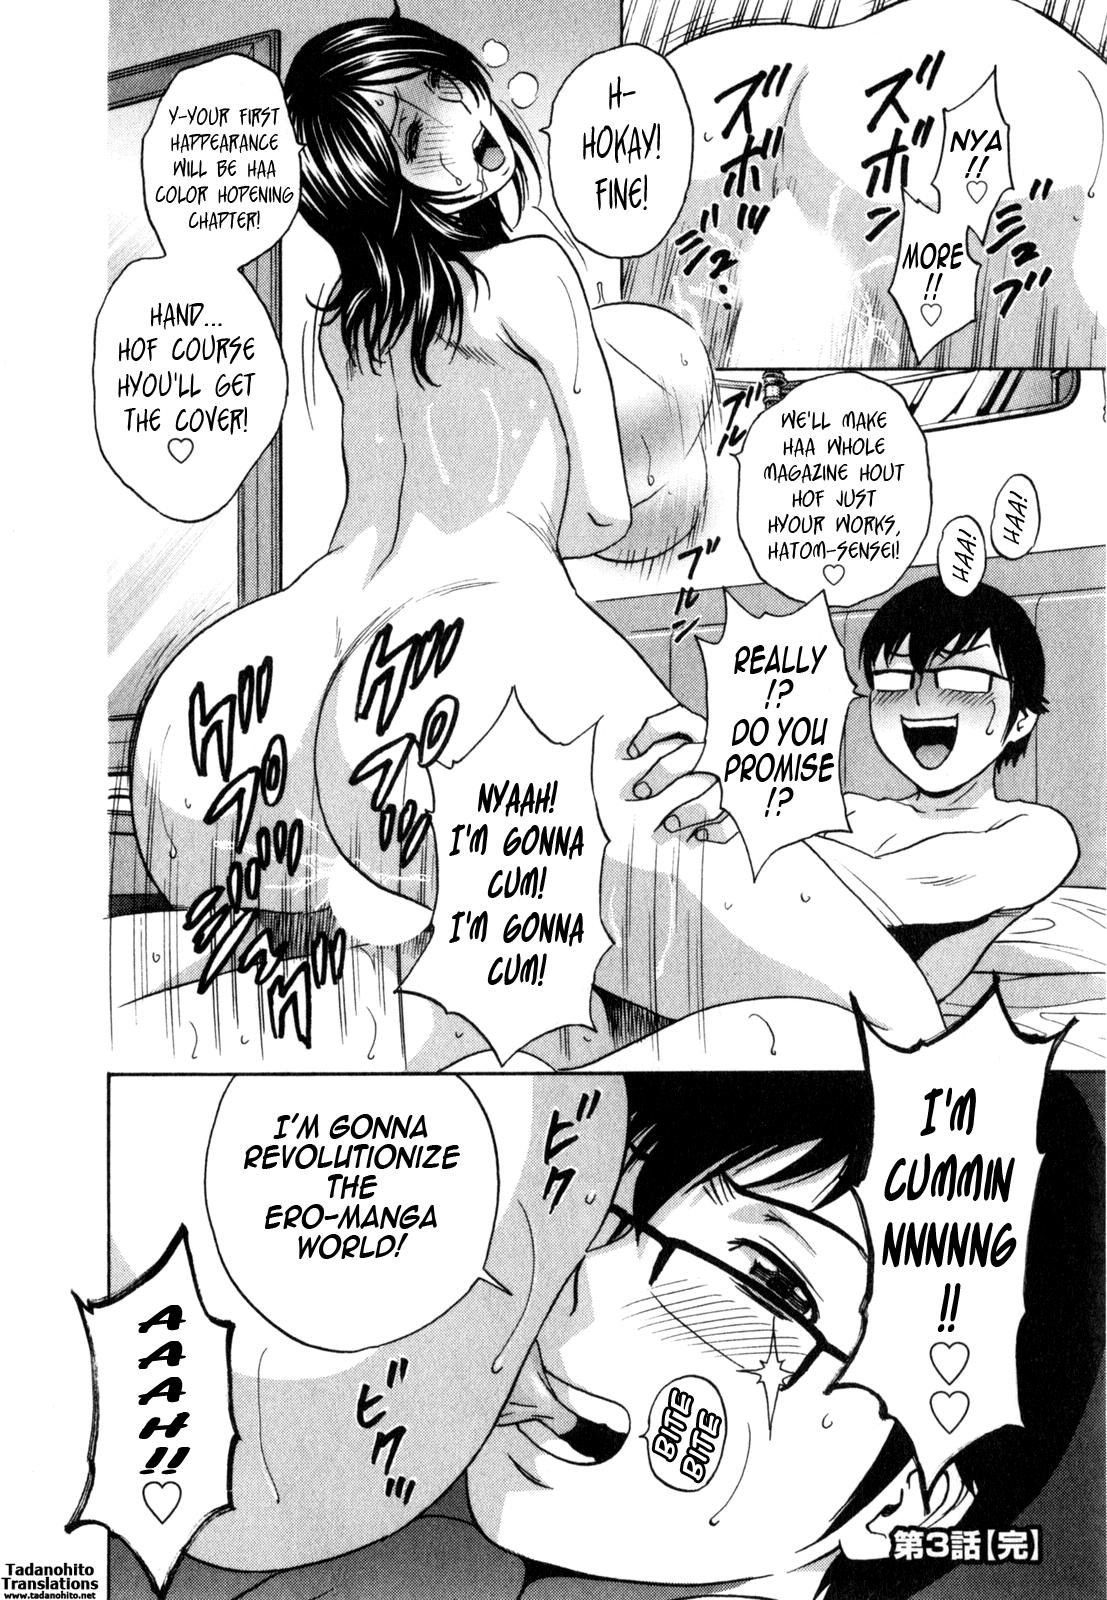 [Hidemaru] Life with Married Women Just Like a Manga 3 - Ch. 1-4 [English] {Tadanohito} 63